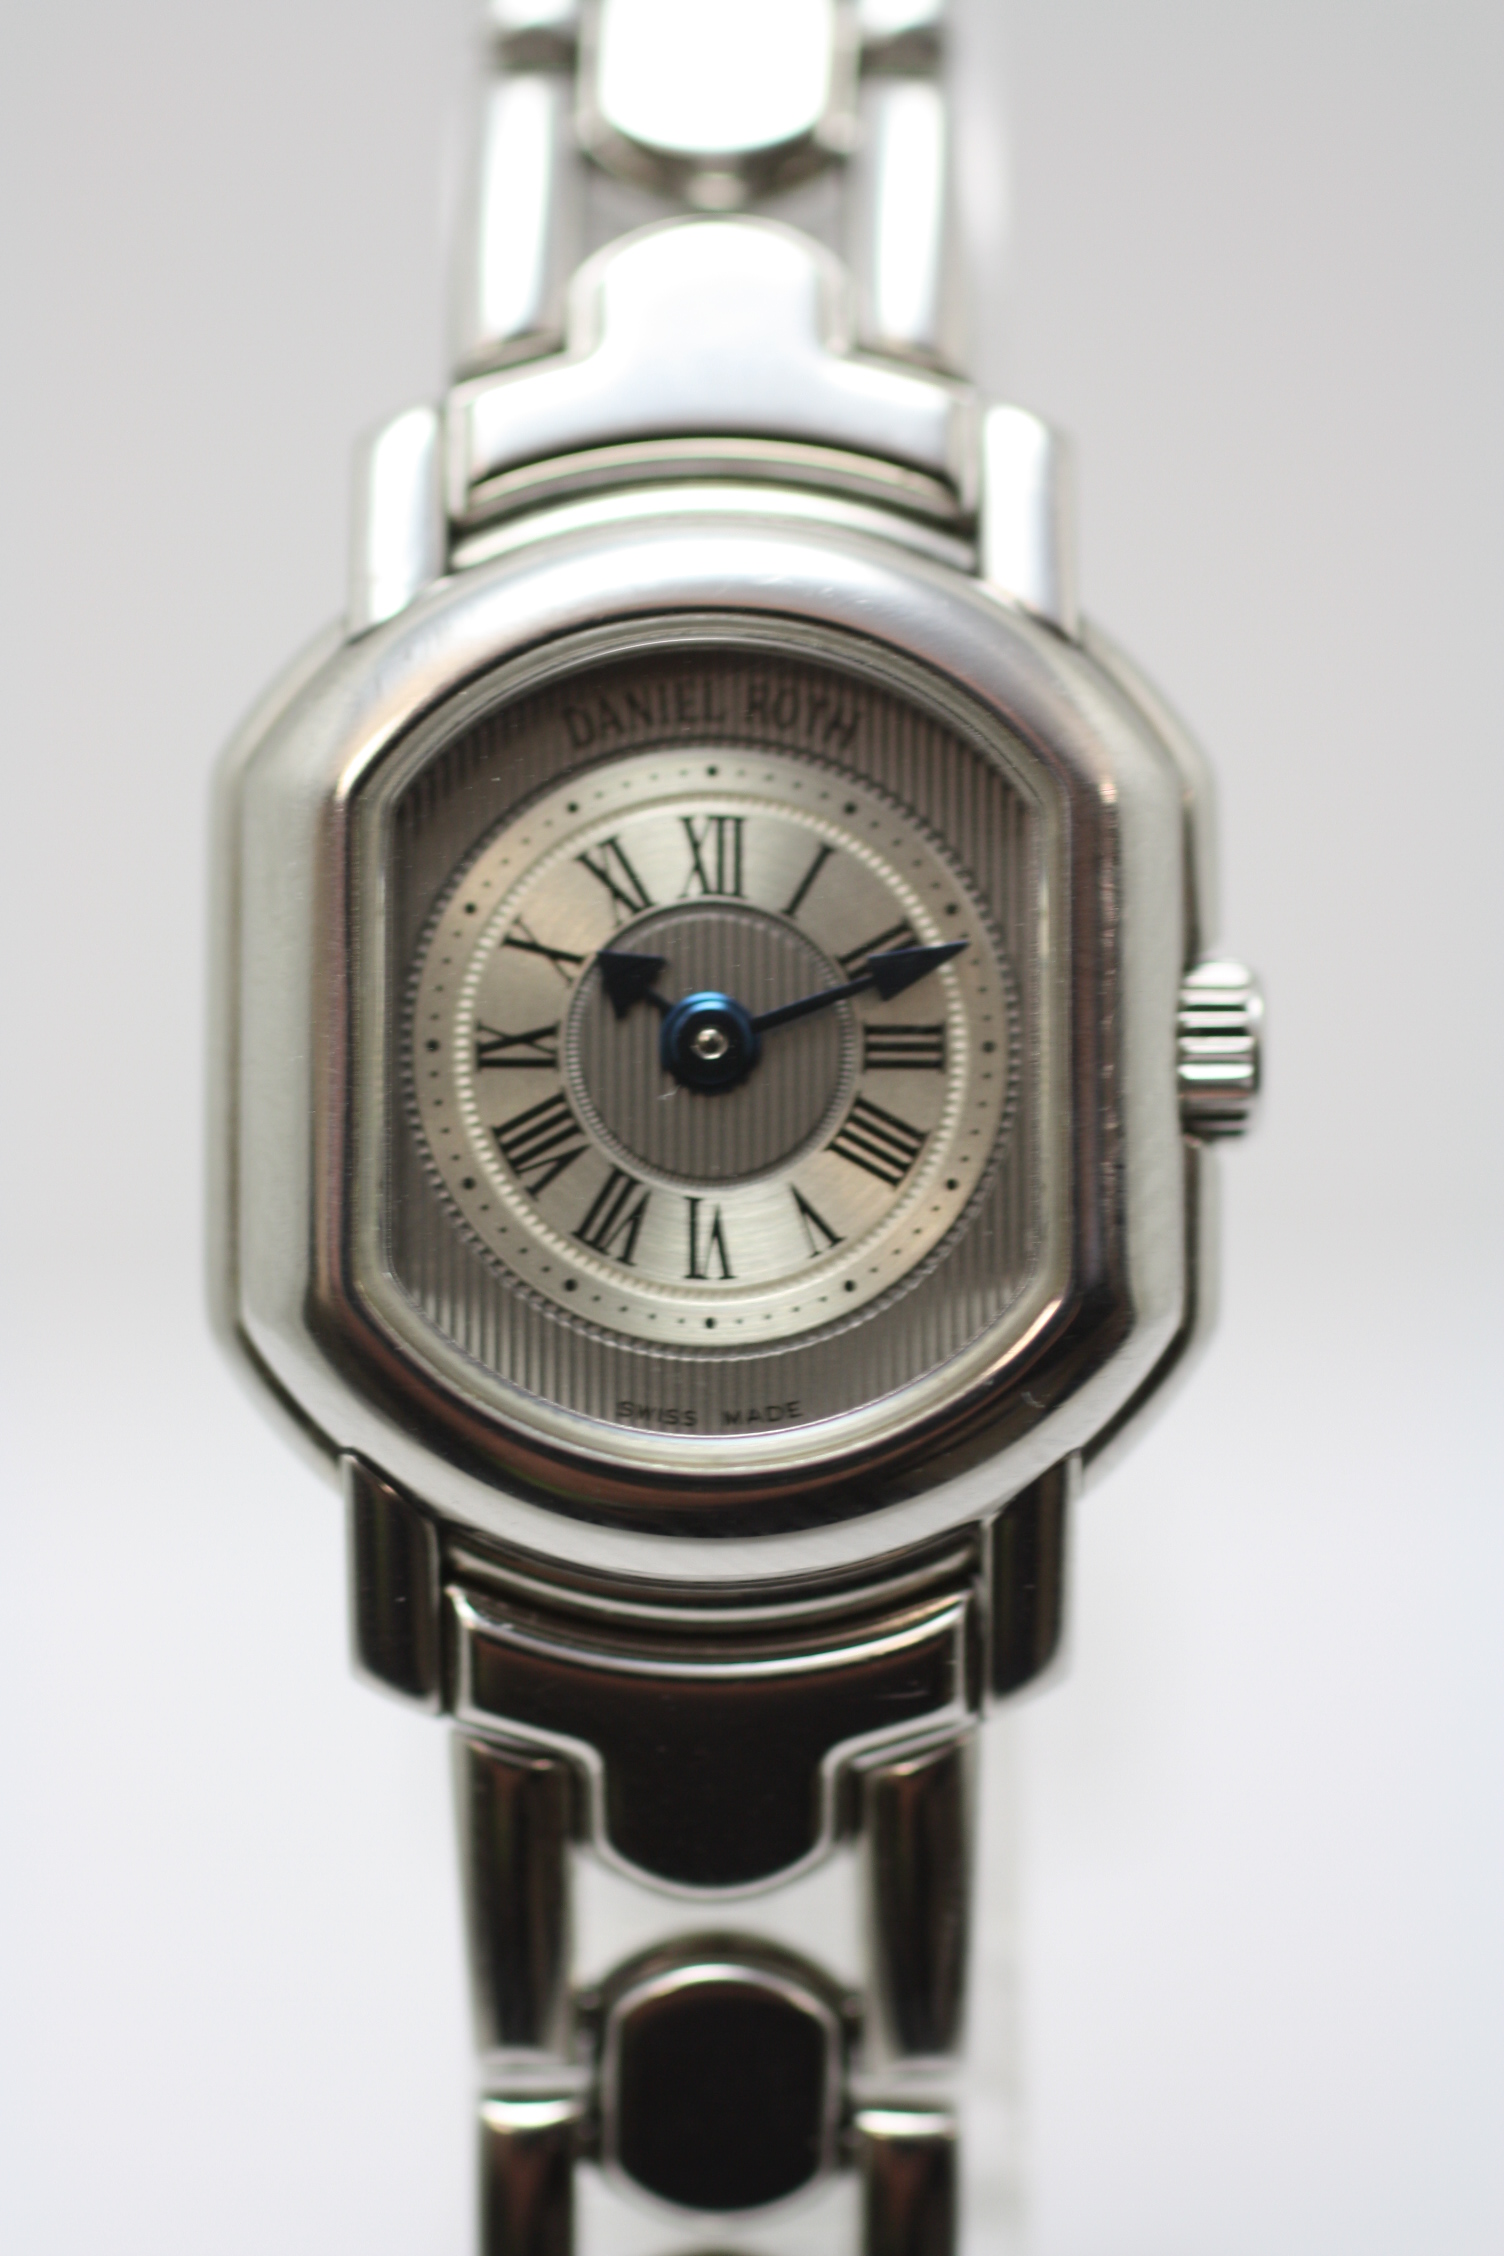 528.ST ダニエルロート ミニ レディース の買取価格 - 高級ブランド腕時計の買取・査定なら GINZA RASIN 11015